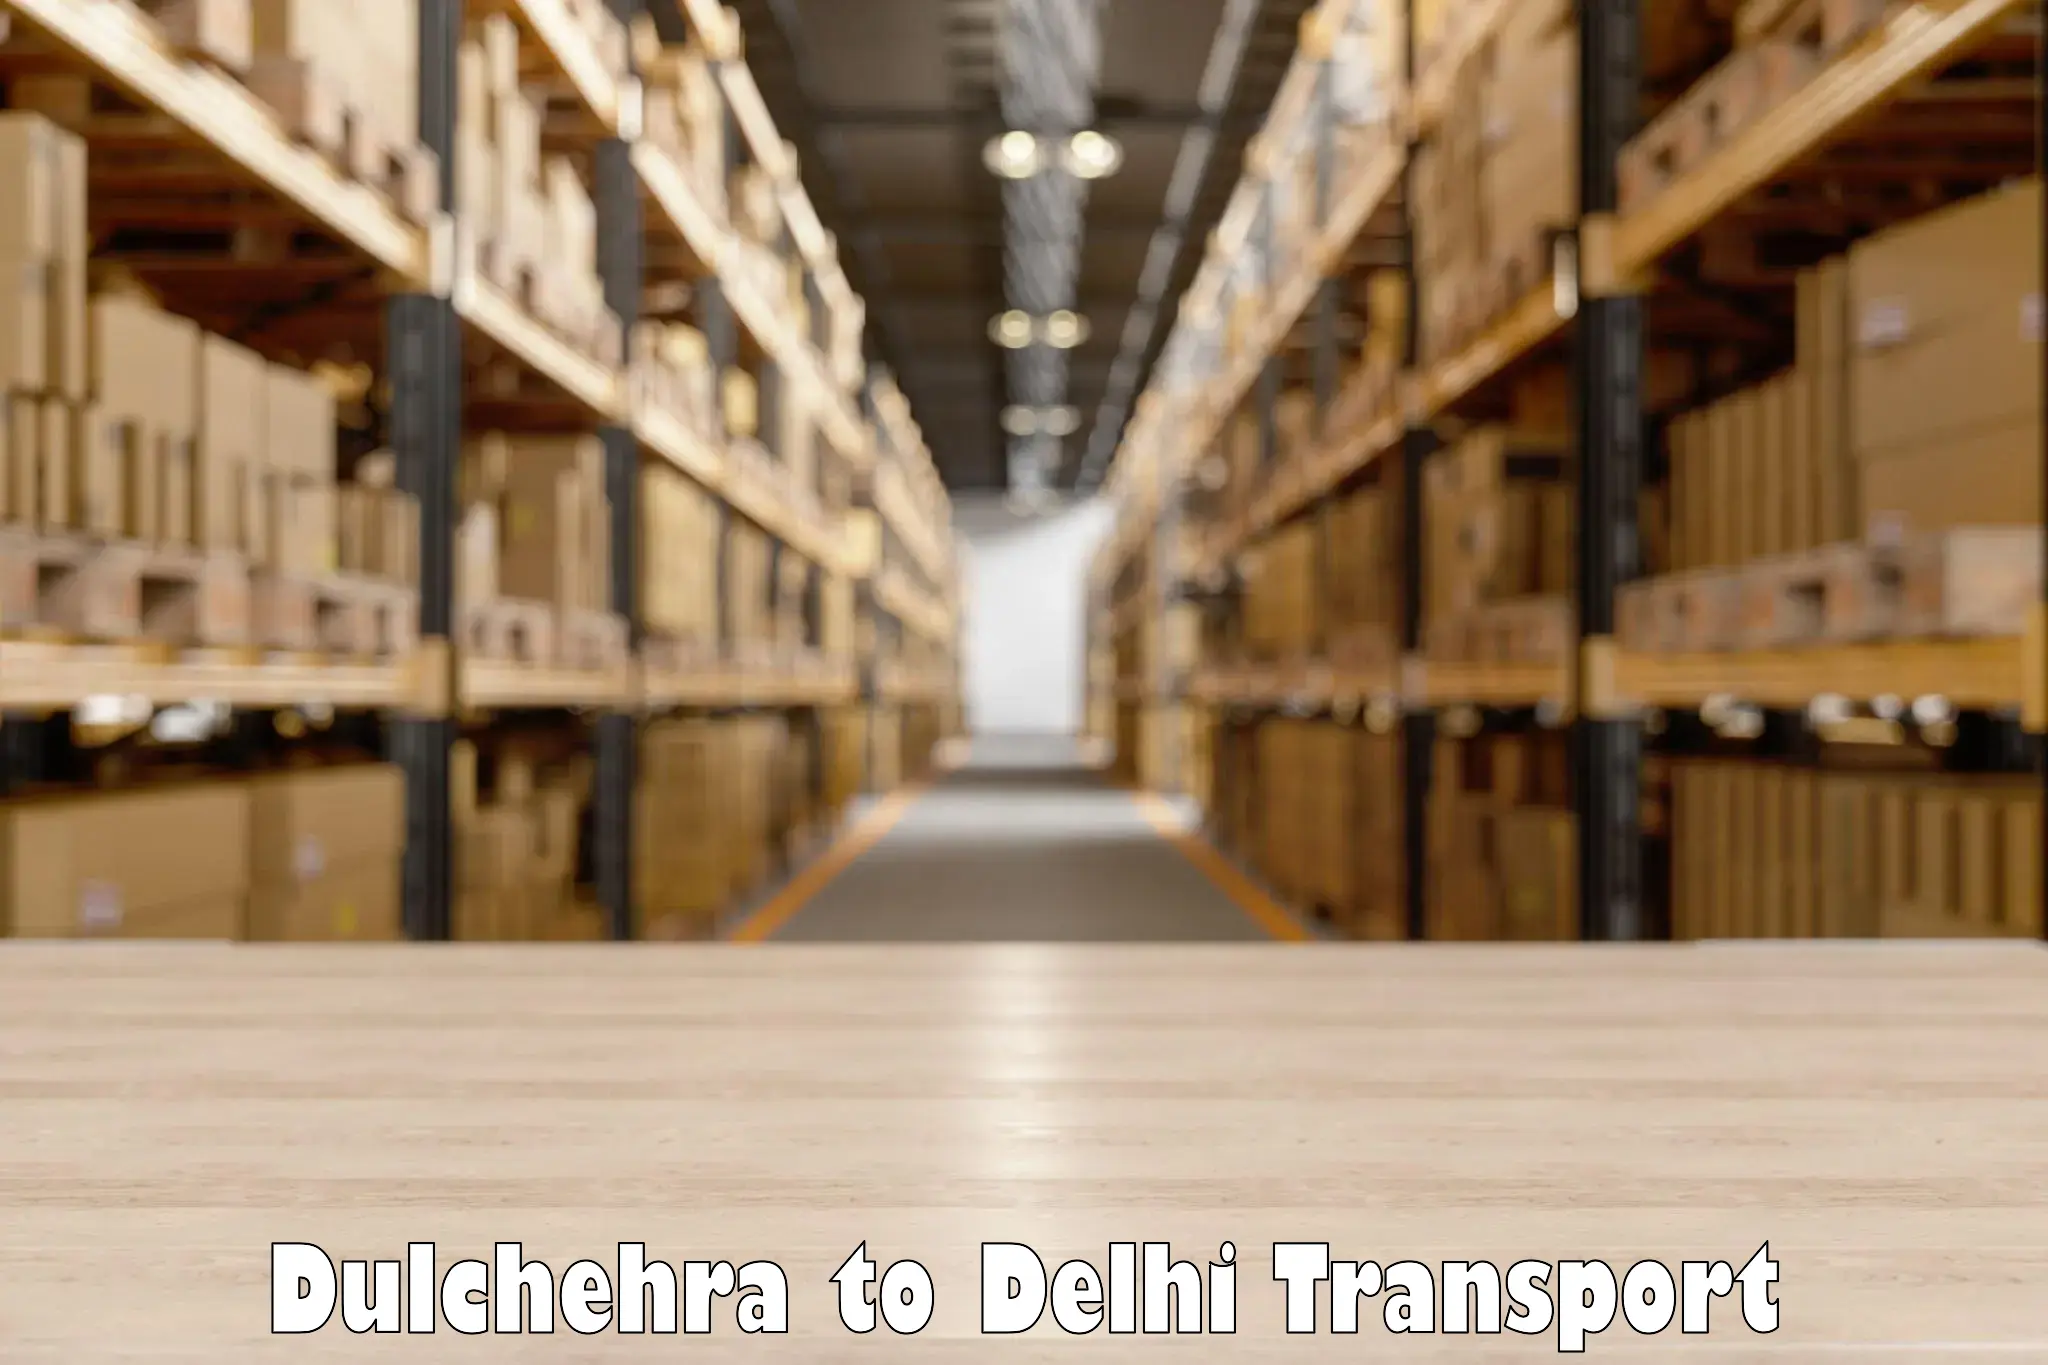 Online transport booking Dulchehra to NCR